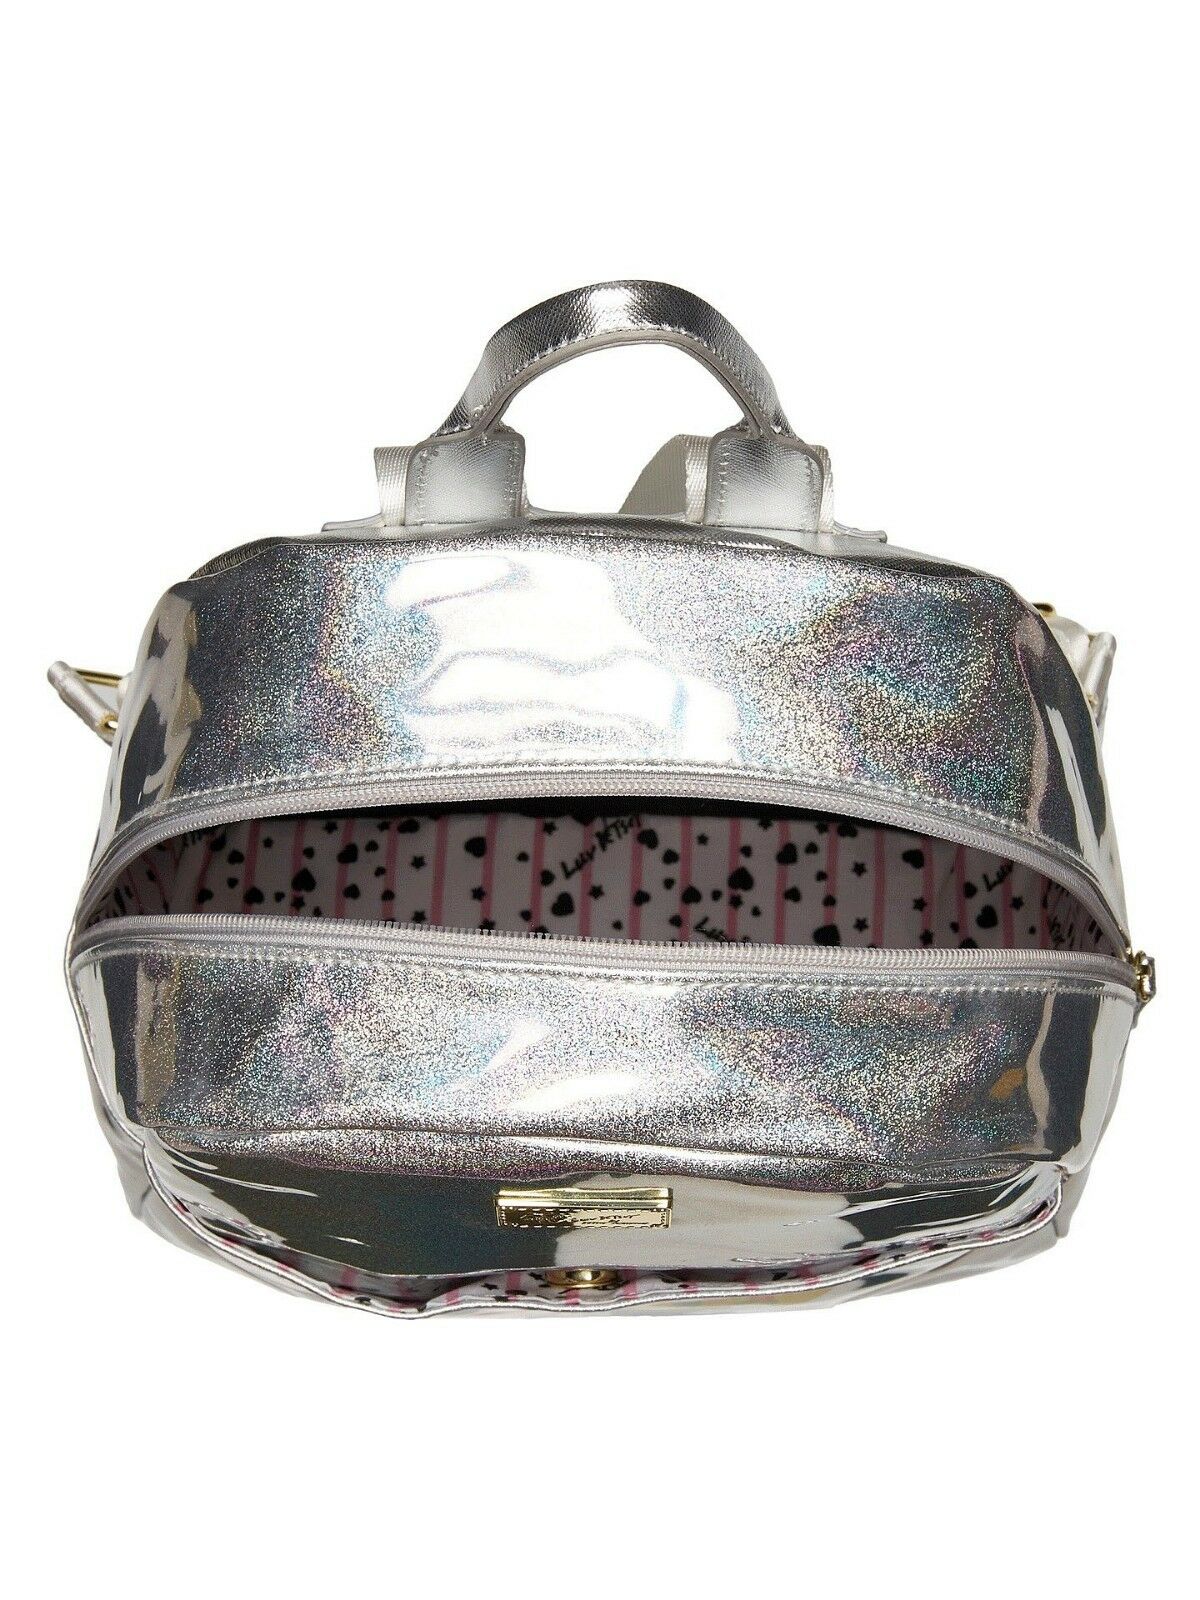 Betsey Johnson Mariss Rainbow Heart Iridescent Silver Metallic Backpack NWT